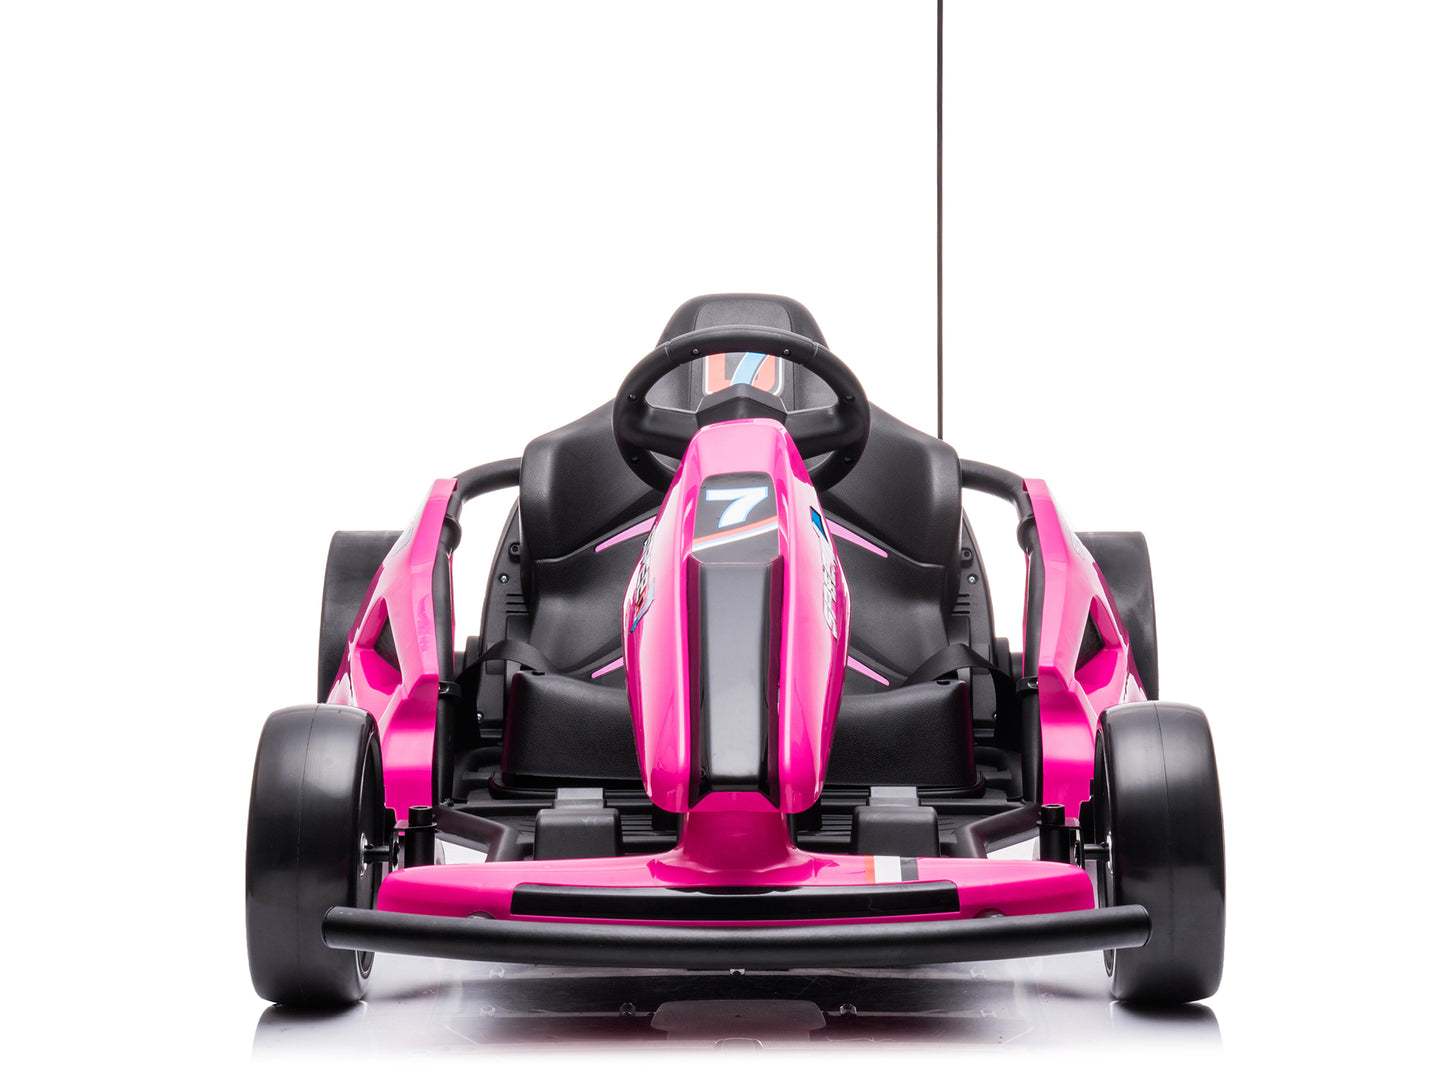 24V TREKCAR Kids Electric Go-Kart with DRIFT Function - Pink